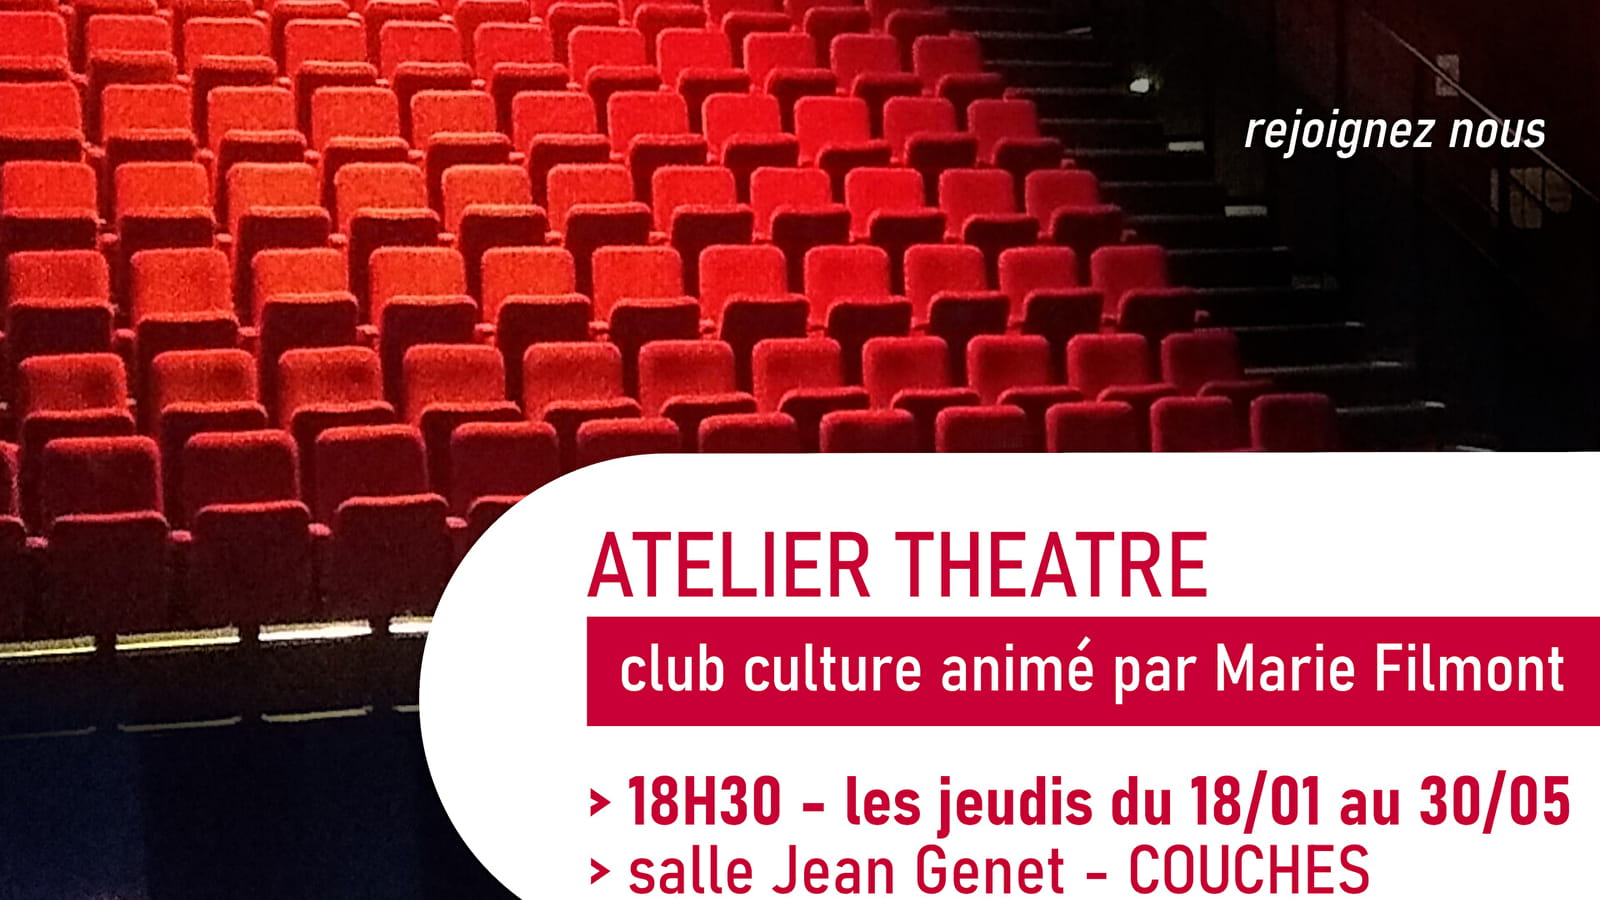 Theatre workshop - Club Culture led by Marie Filmont